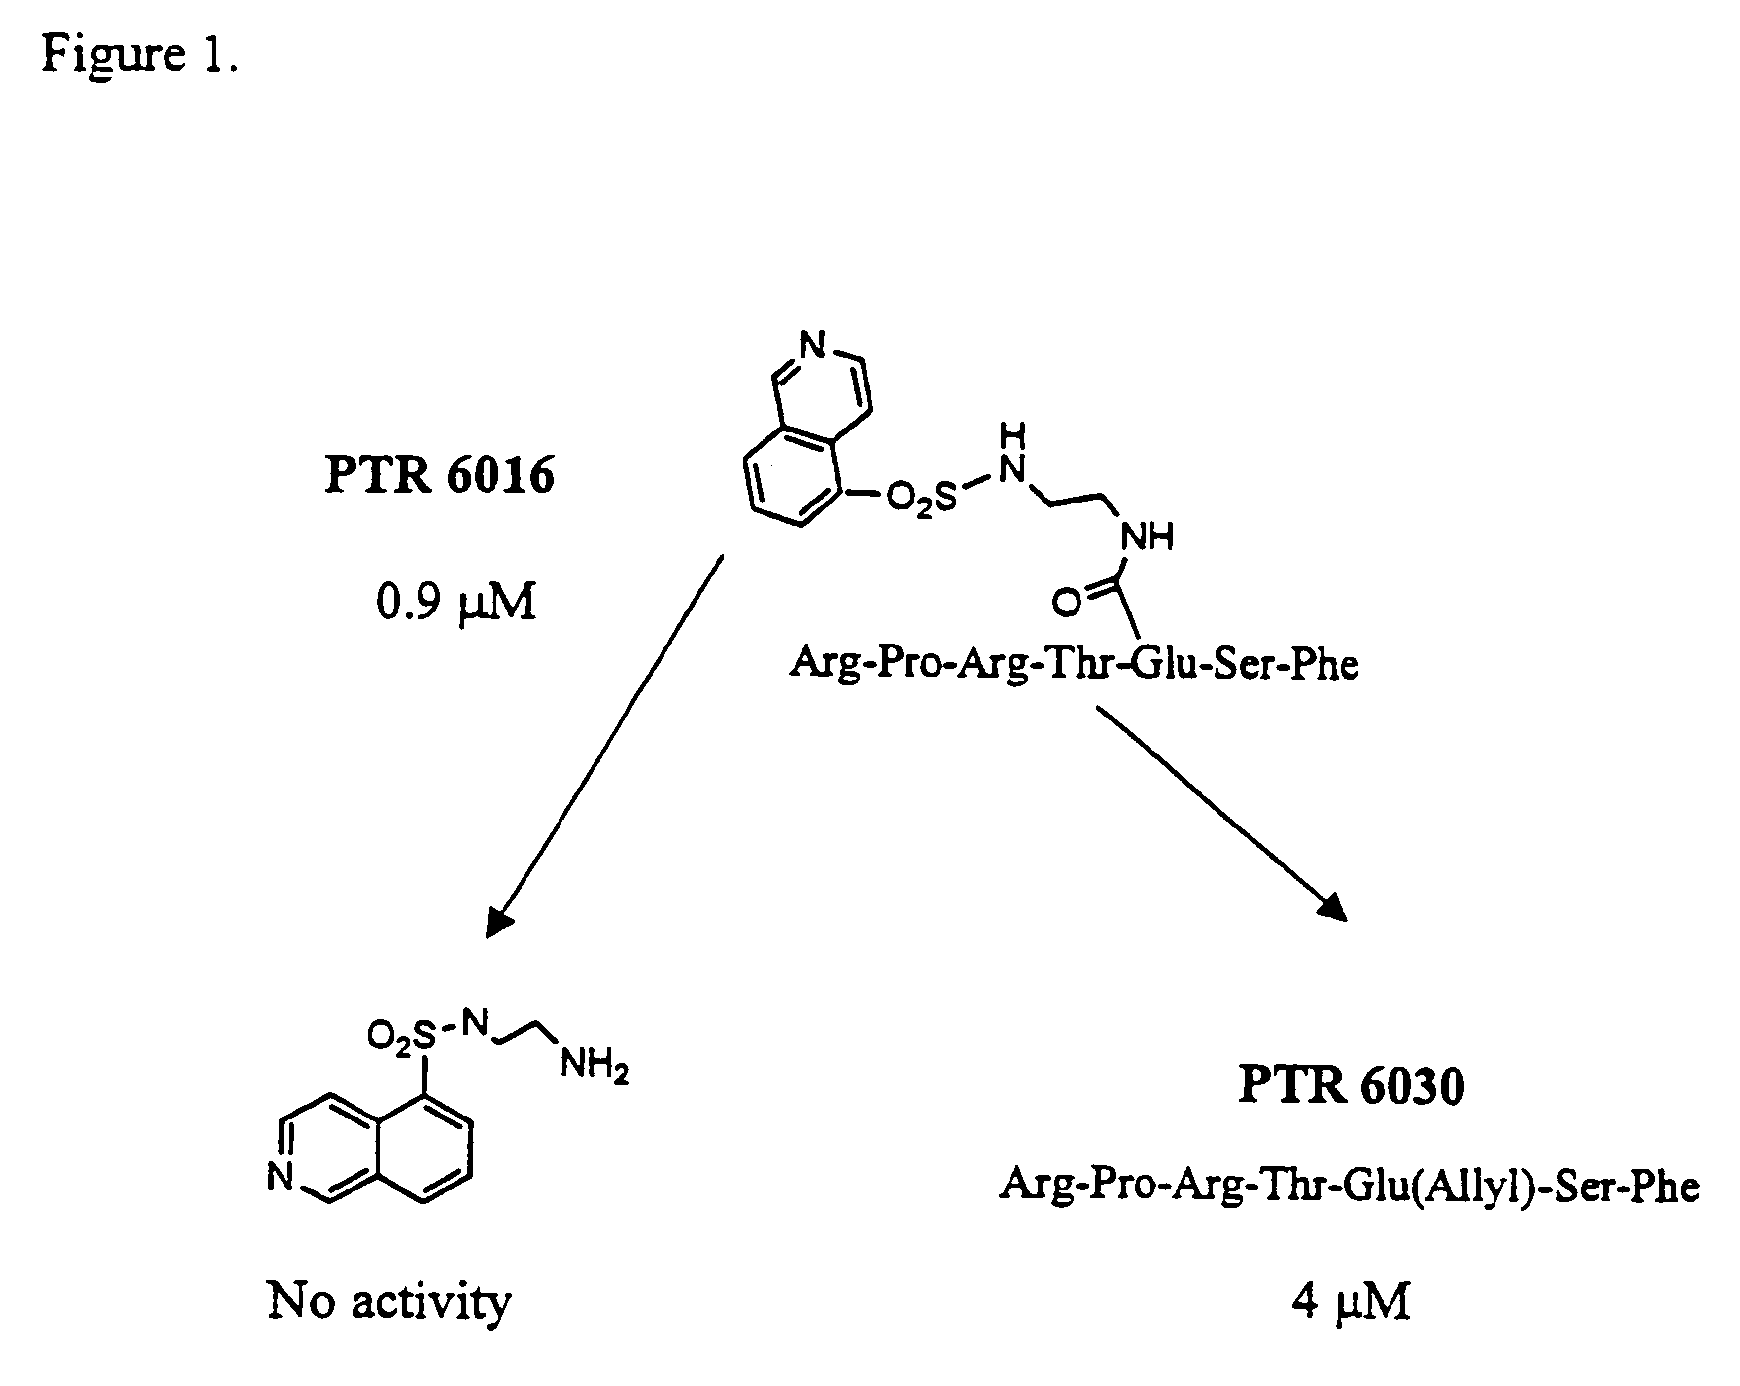 Protein kinase inhibitors comprising ATP mimetics conjugated to peptides or peptidomimetics